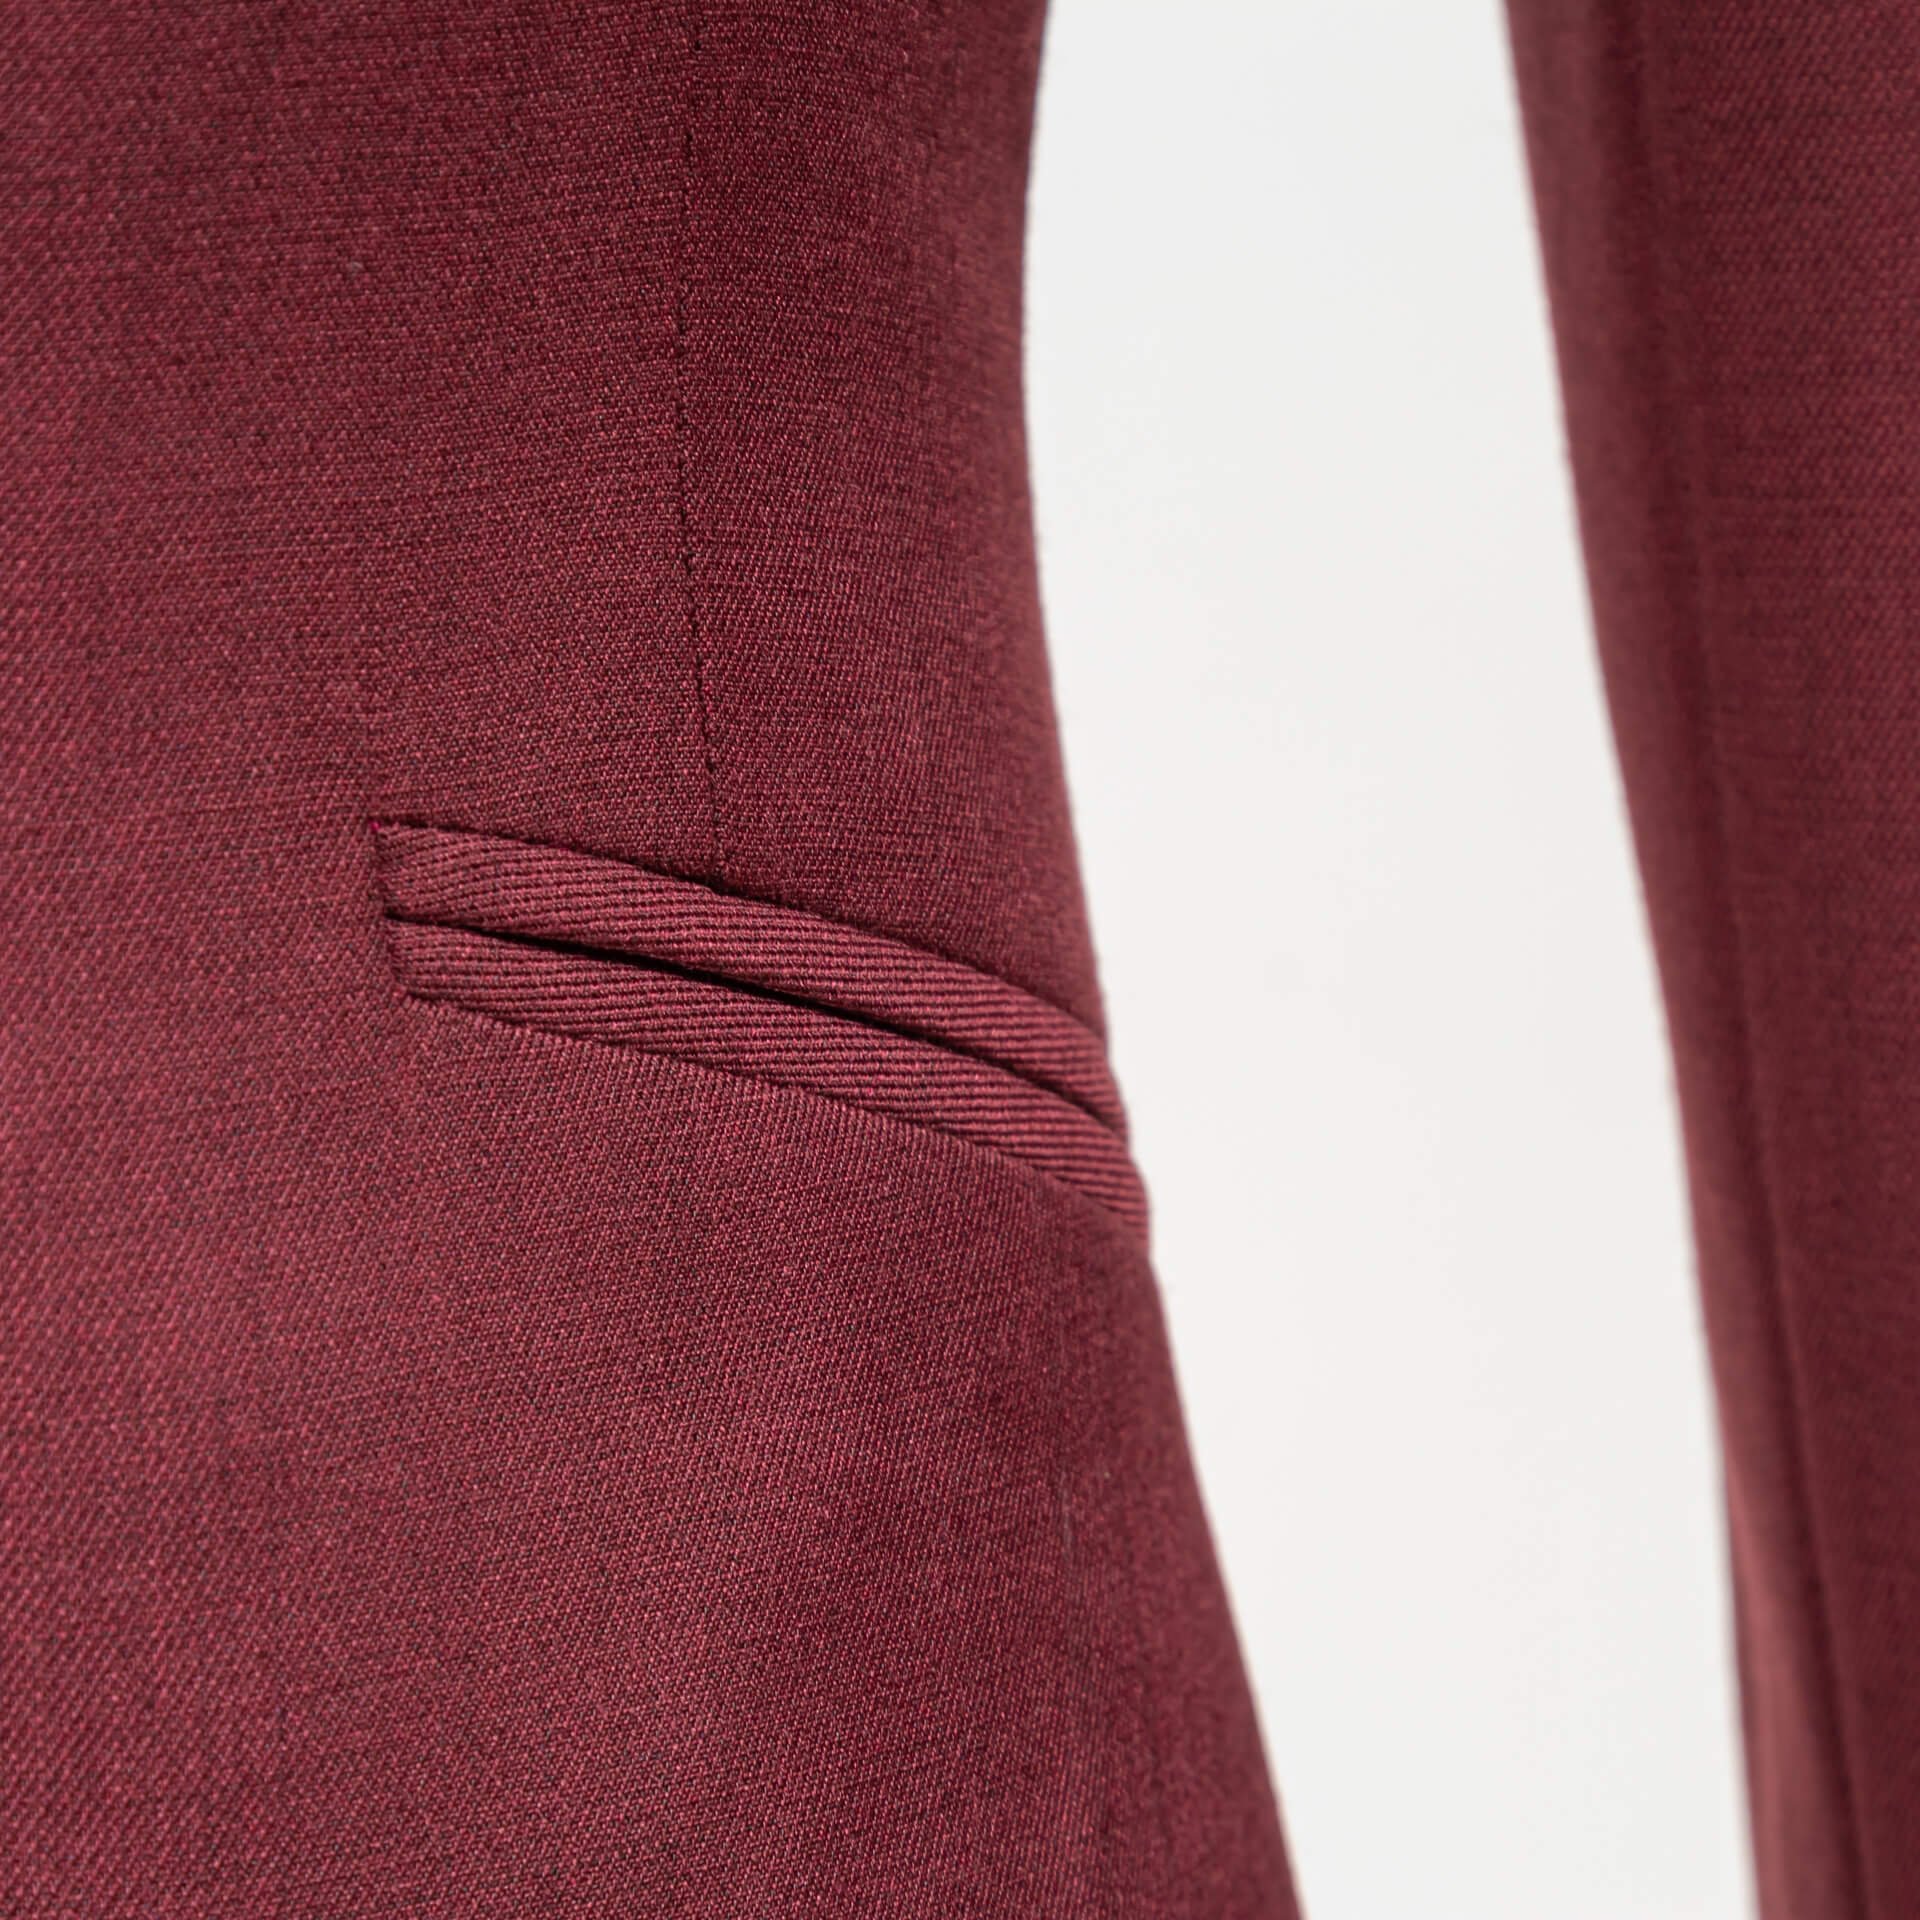 Ladies Pants Suit Bespoke Tailored Terra Cotta.